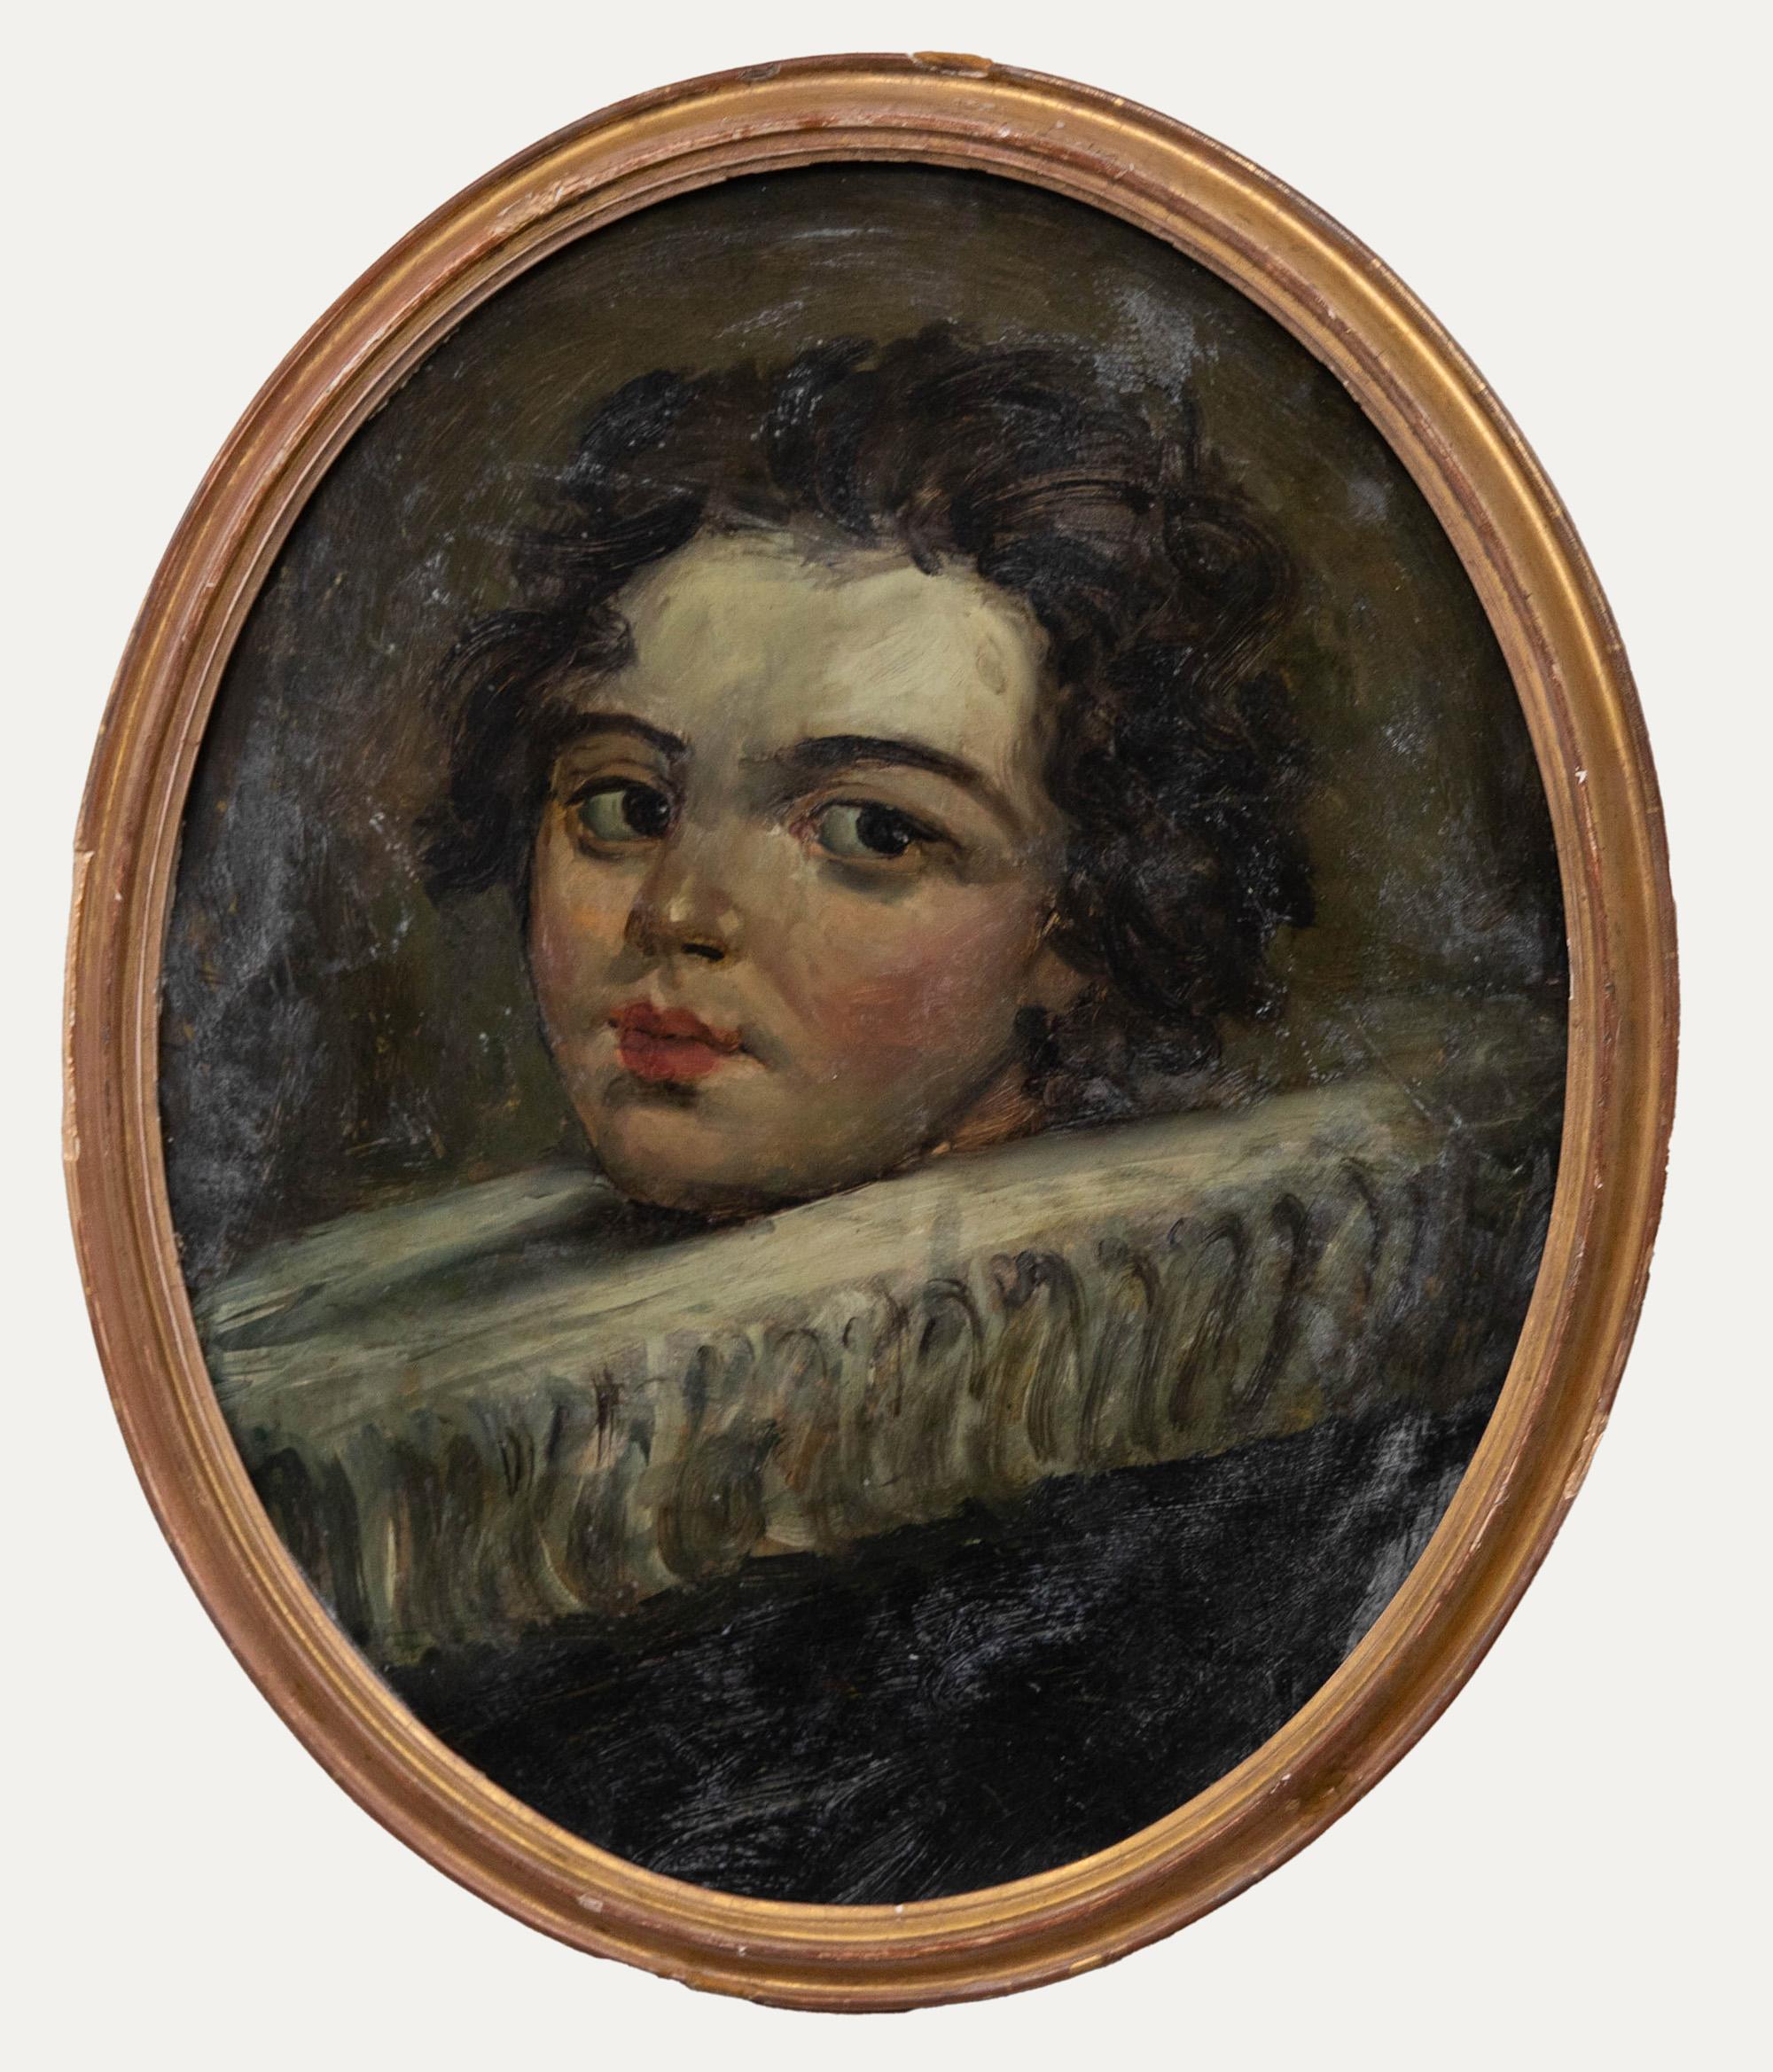 Unknown Portrait Painting - 19th Century Oil - Portrait of a Prince